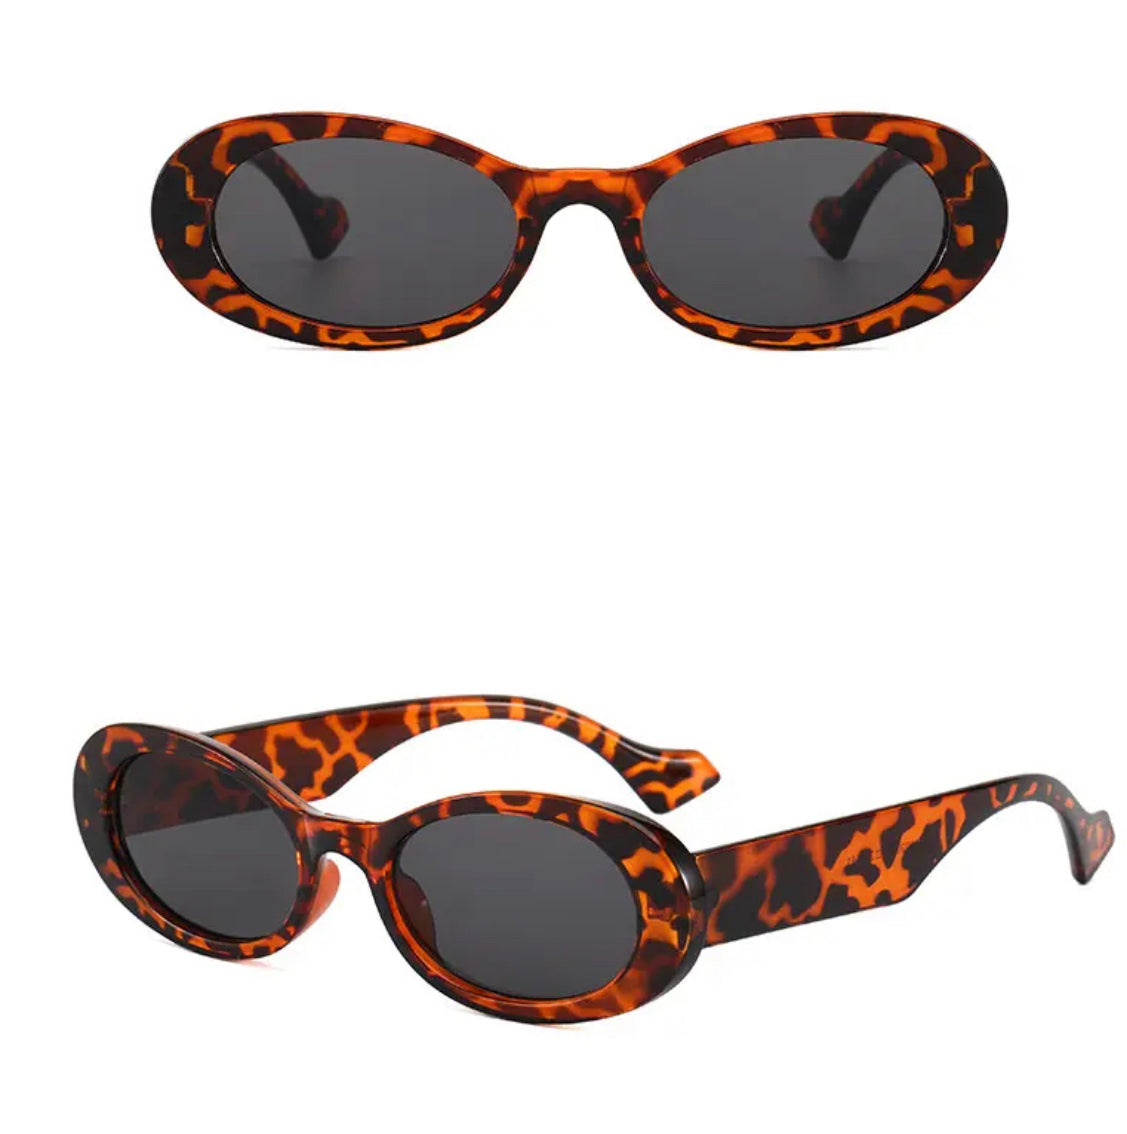 Chloé sunglasses